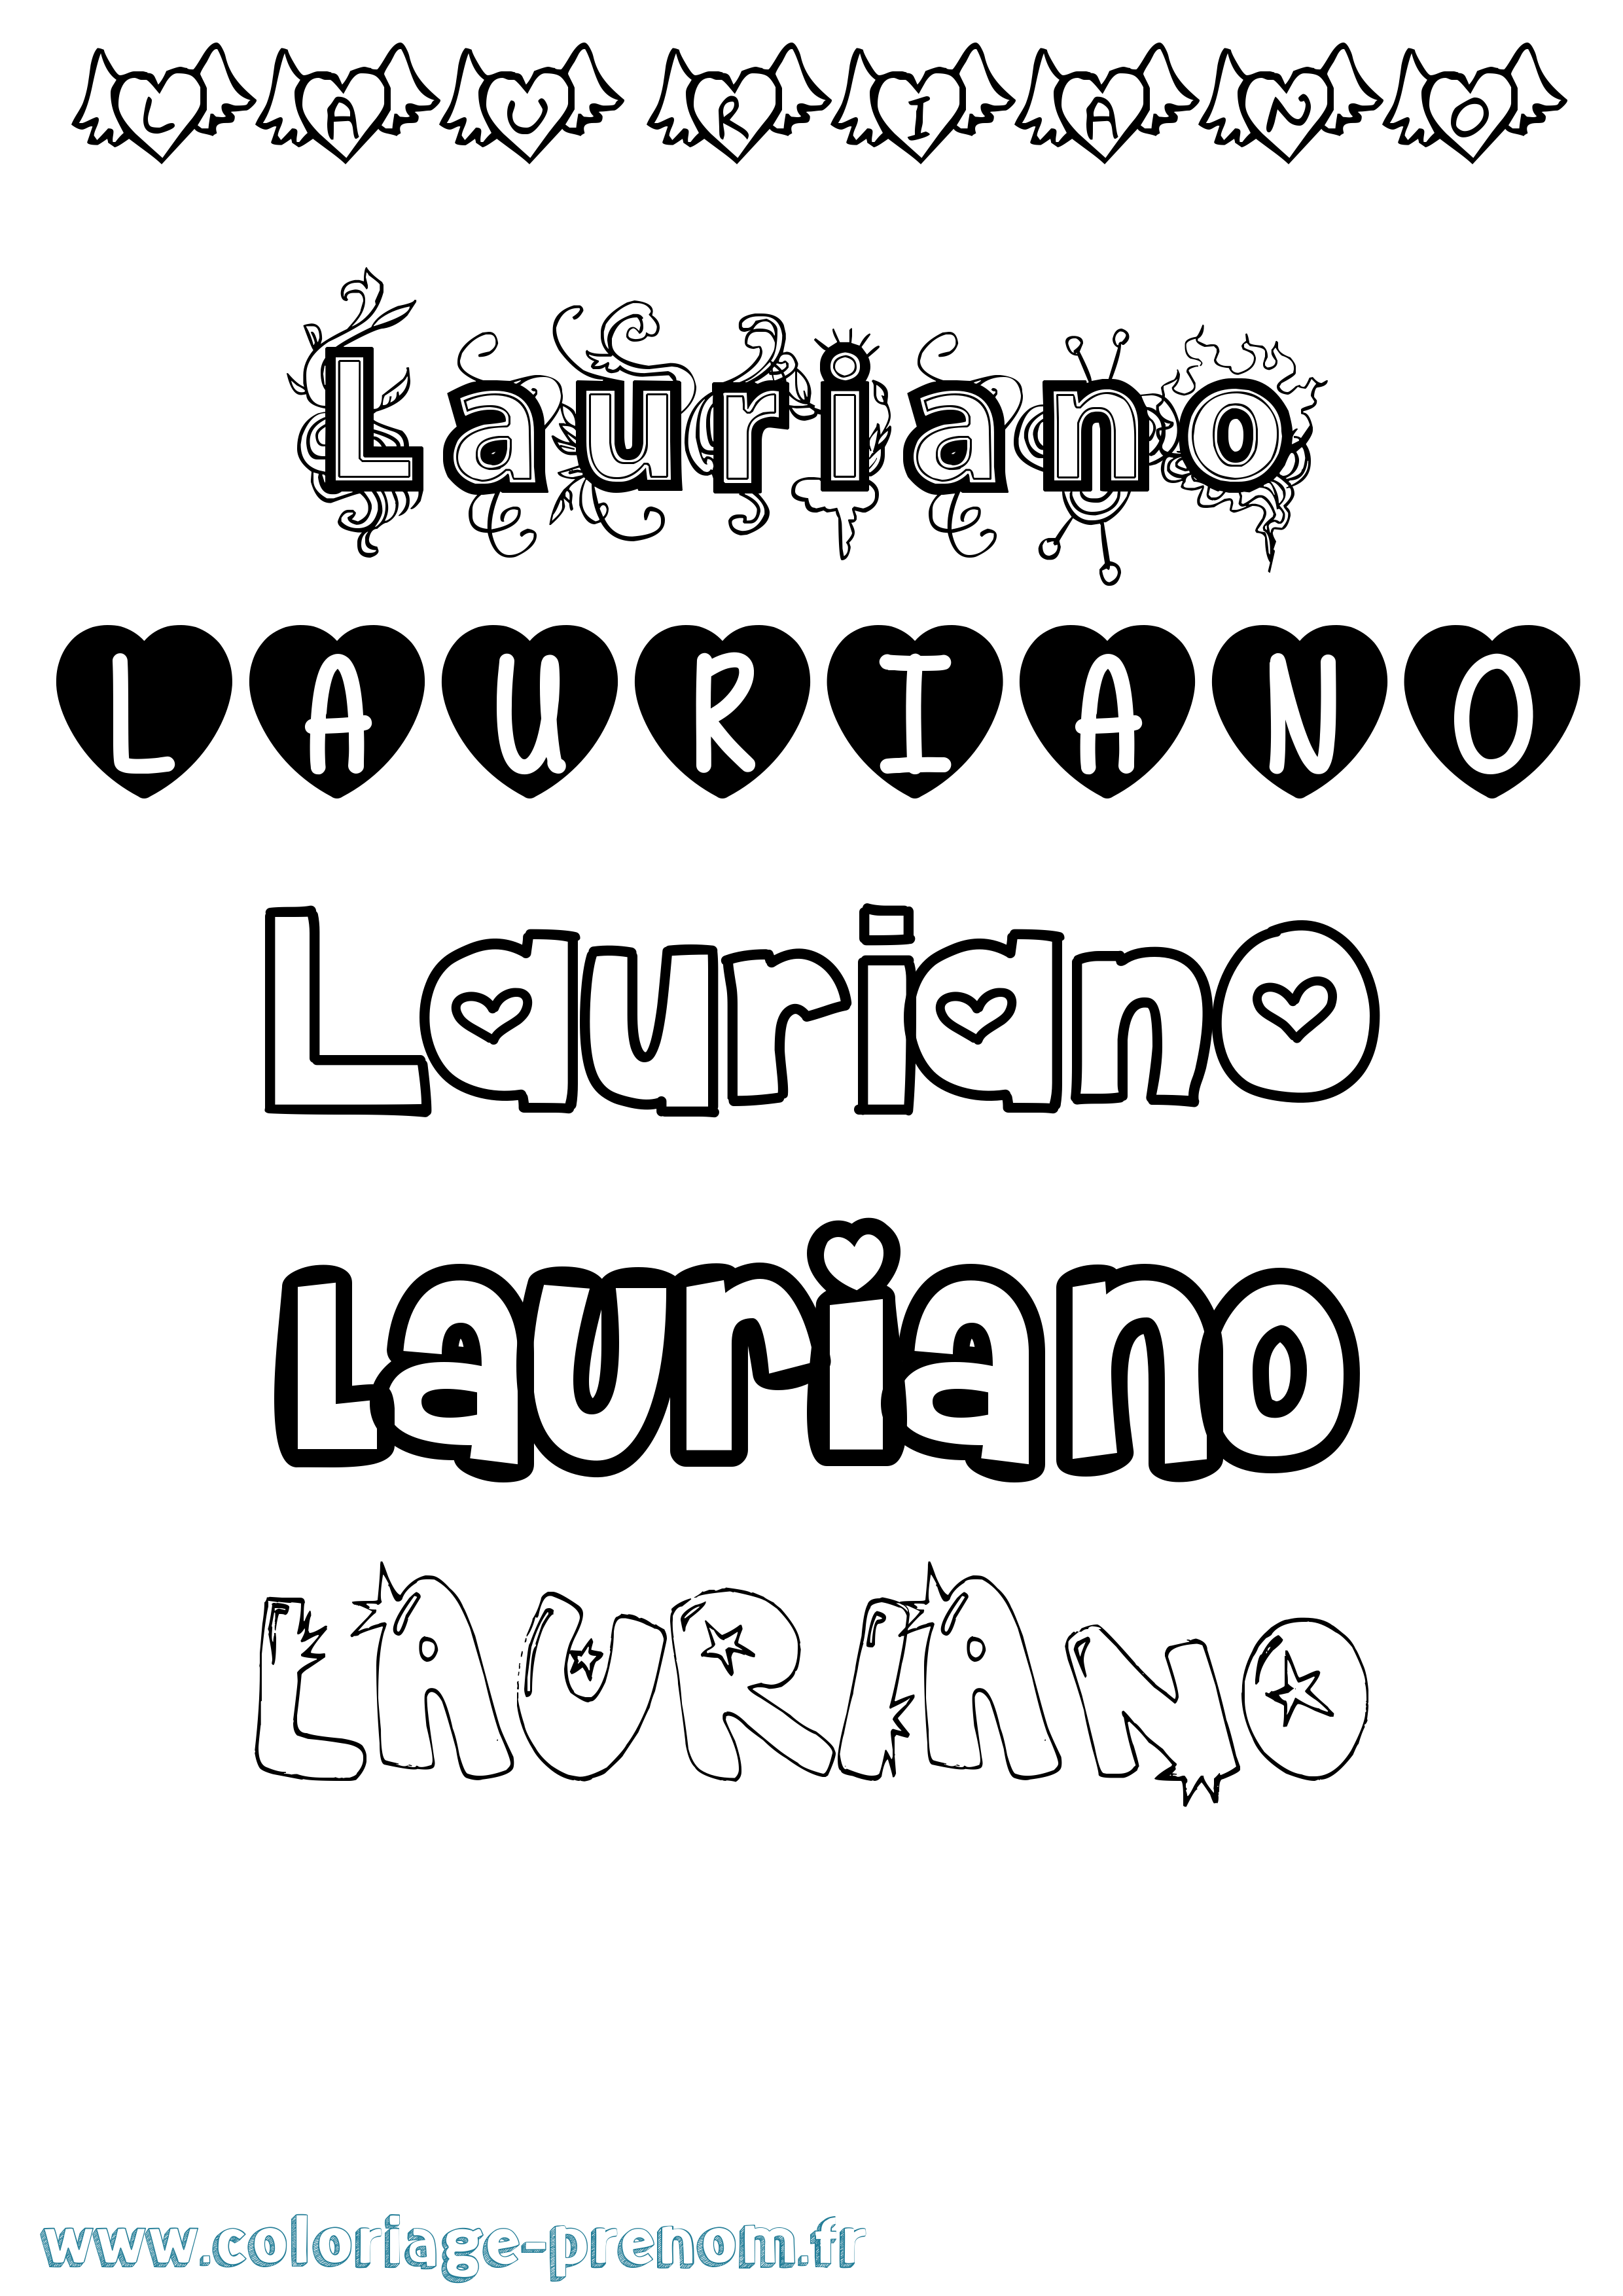 Coloriage prénom Lauriano Girly